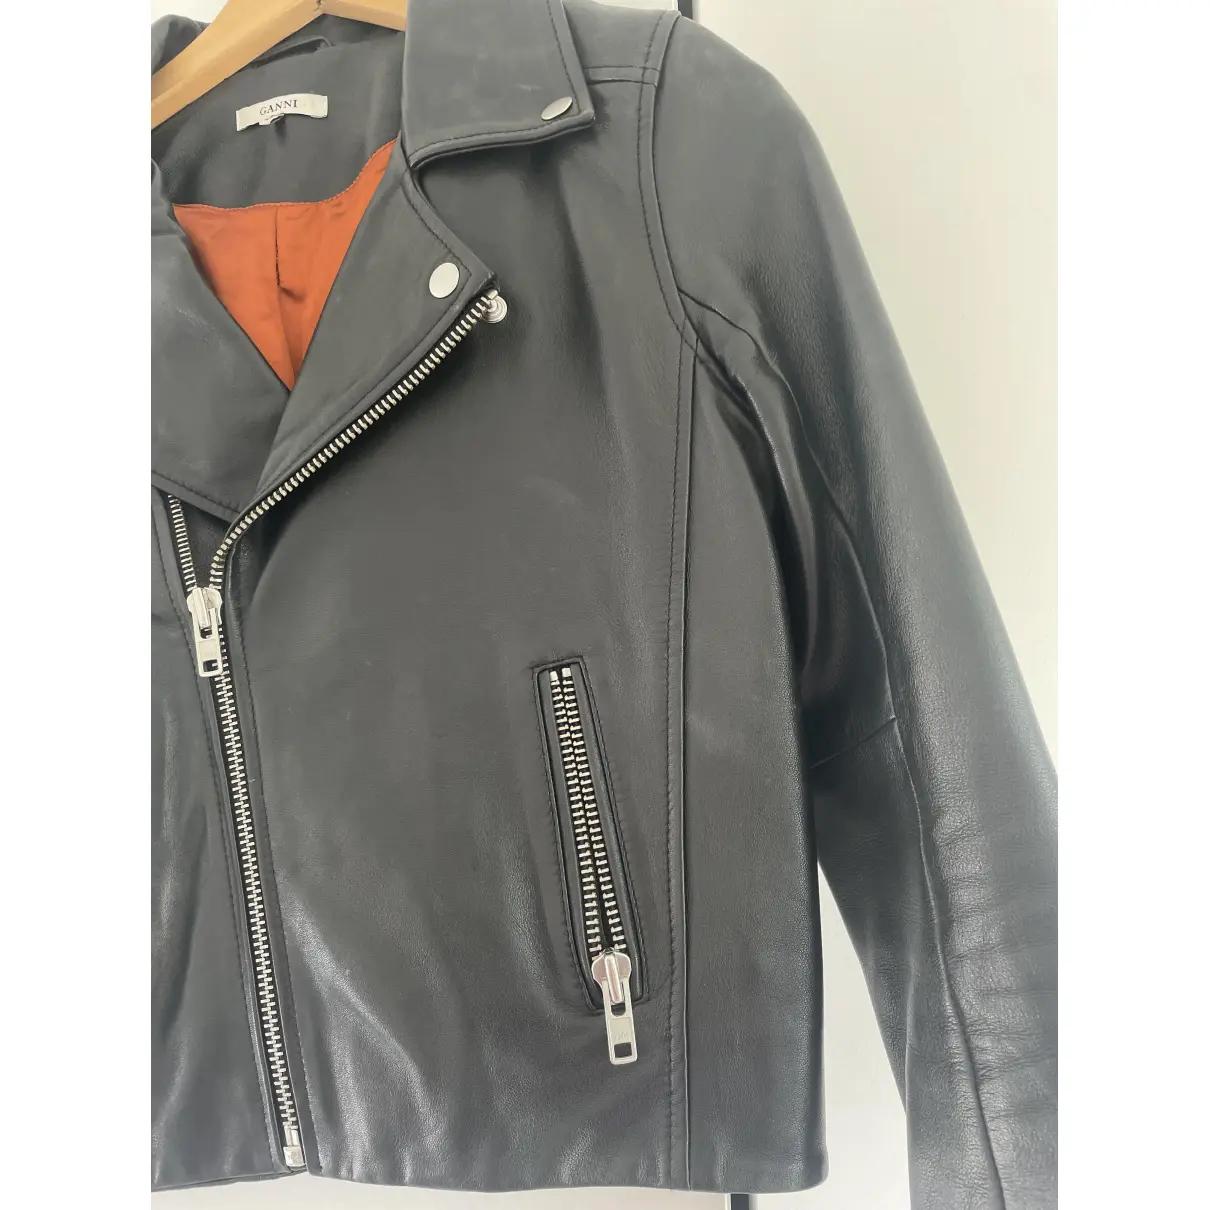 Buy Ganni Fall Winter 2019 leather jacket online